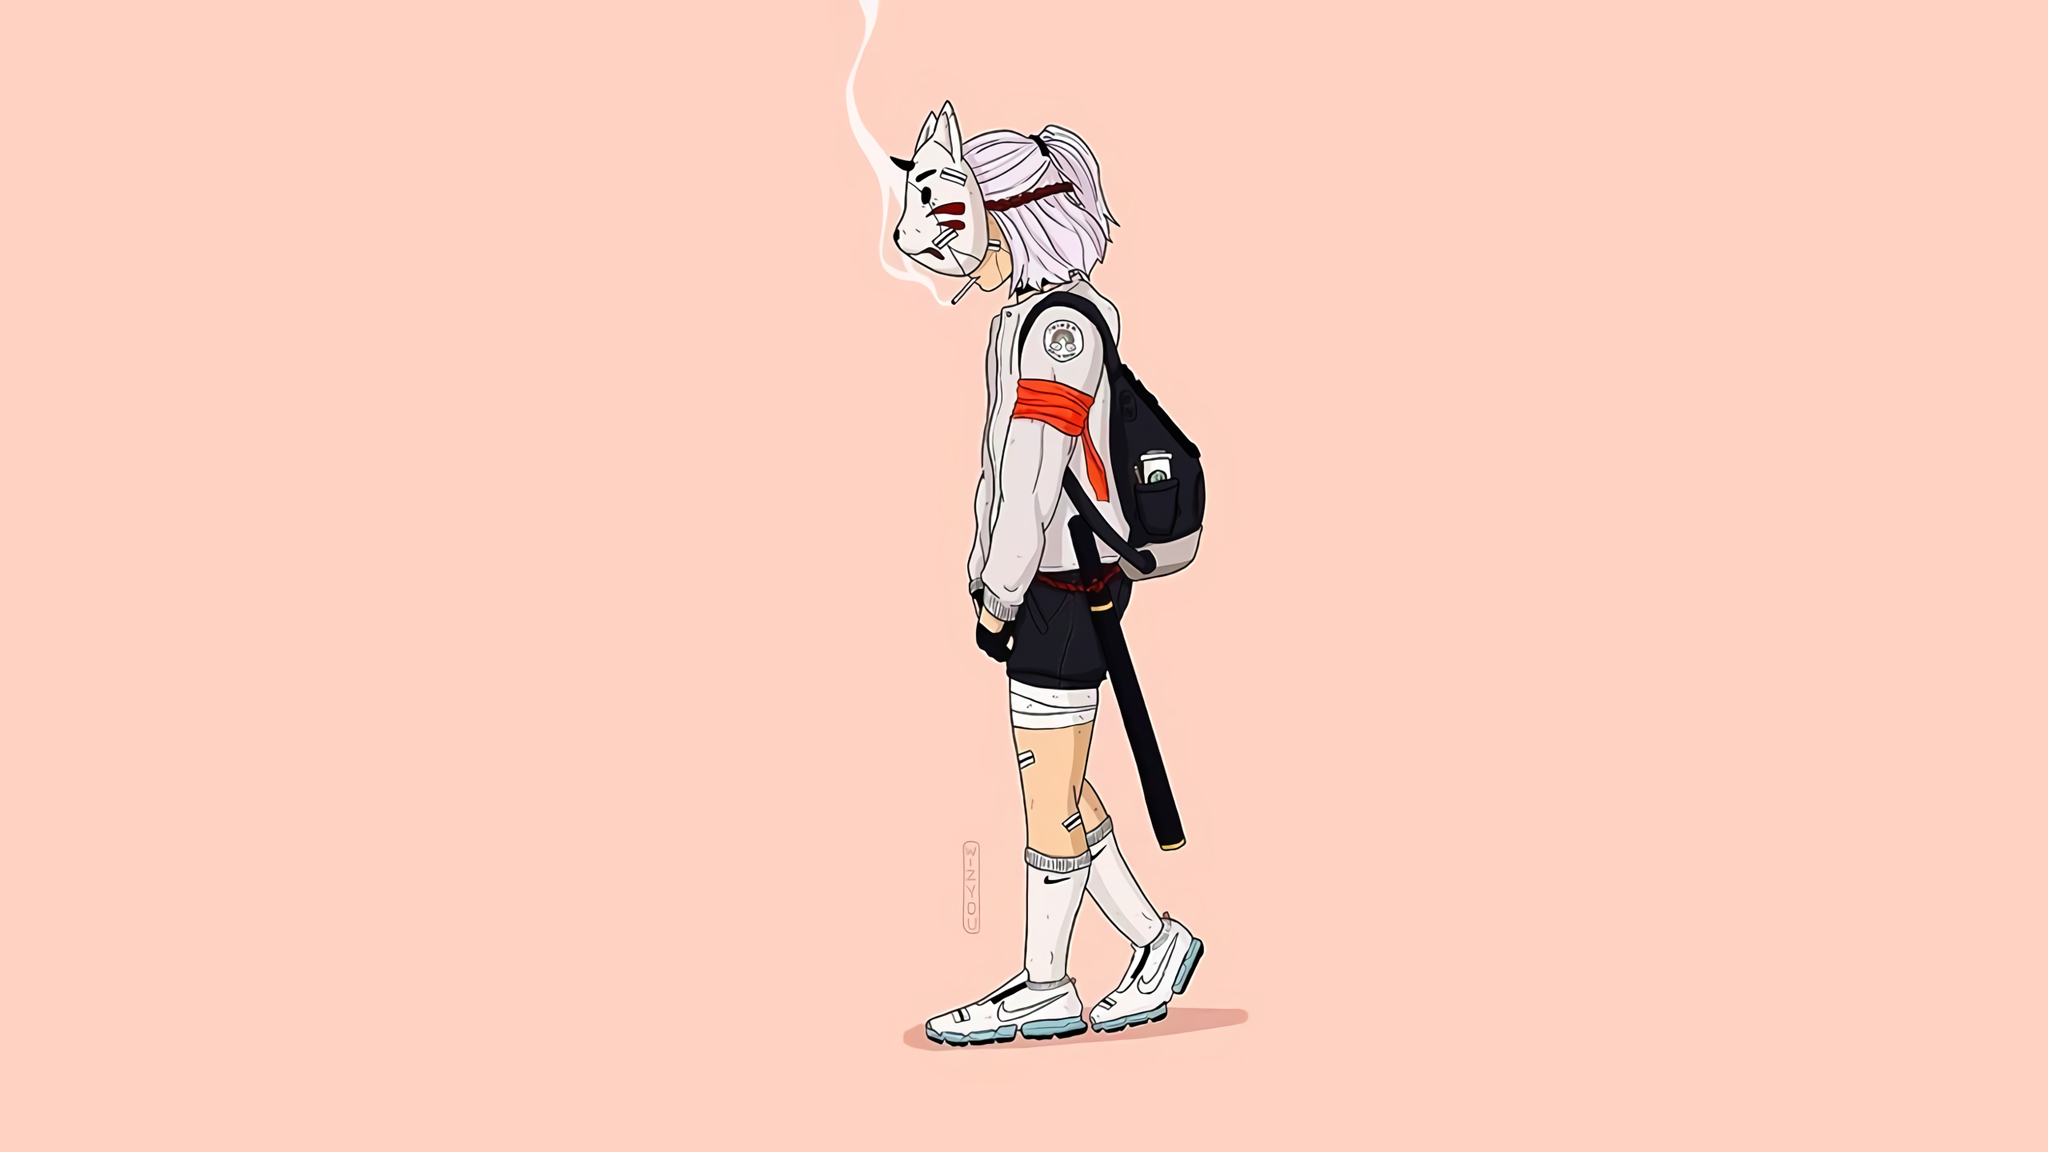 Wallpaper, anime girls, original characters, watermarked, shoes, Nike, White socks, smoking, backpack, mask 2048x1152